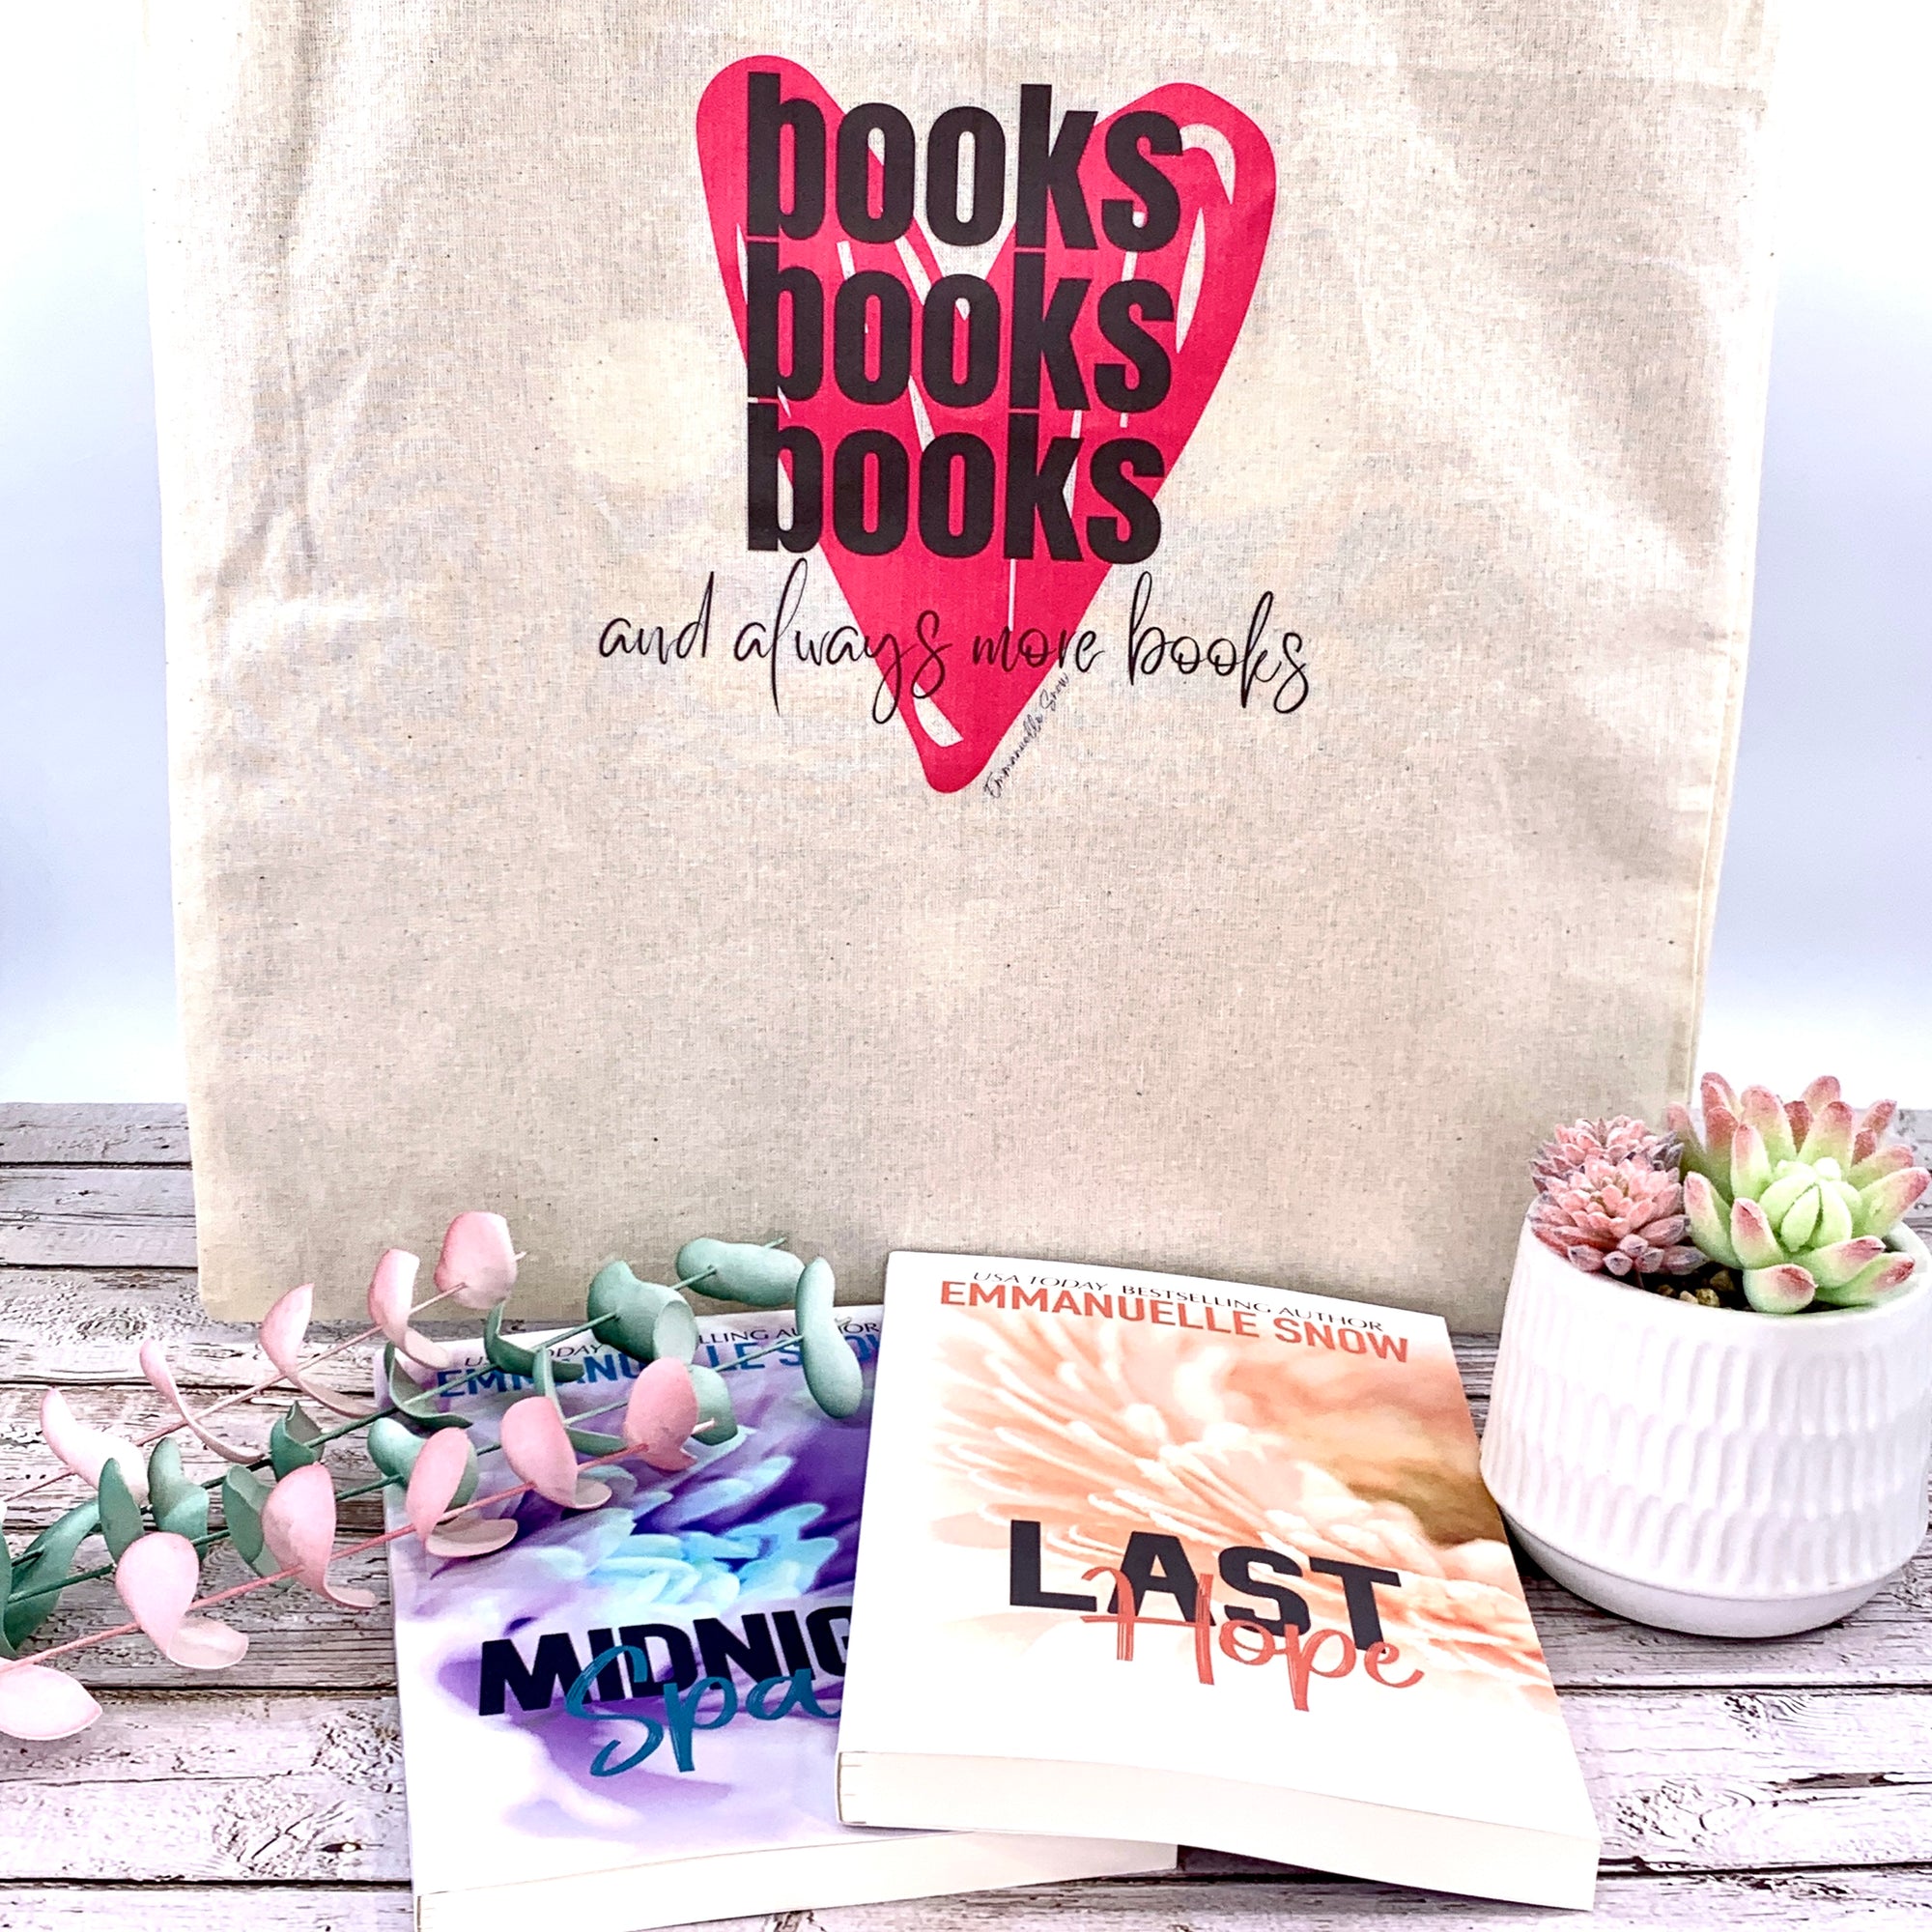 Books-Books-Books Tote Bag